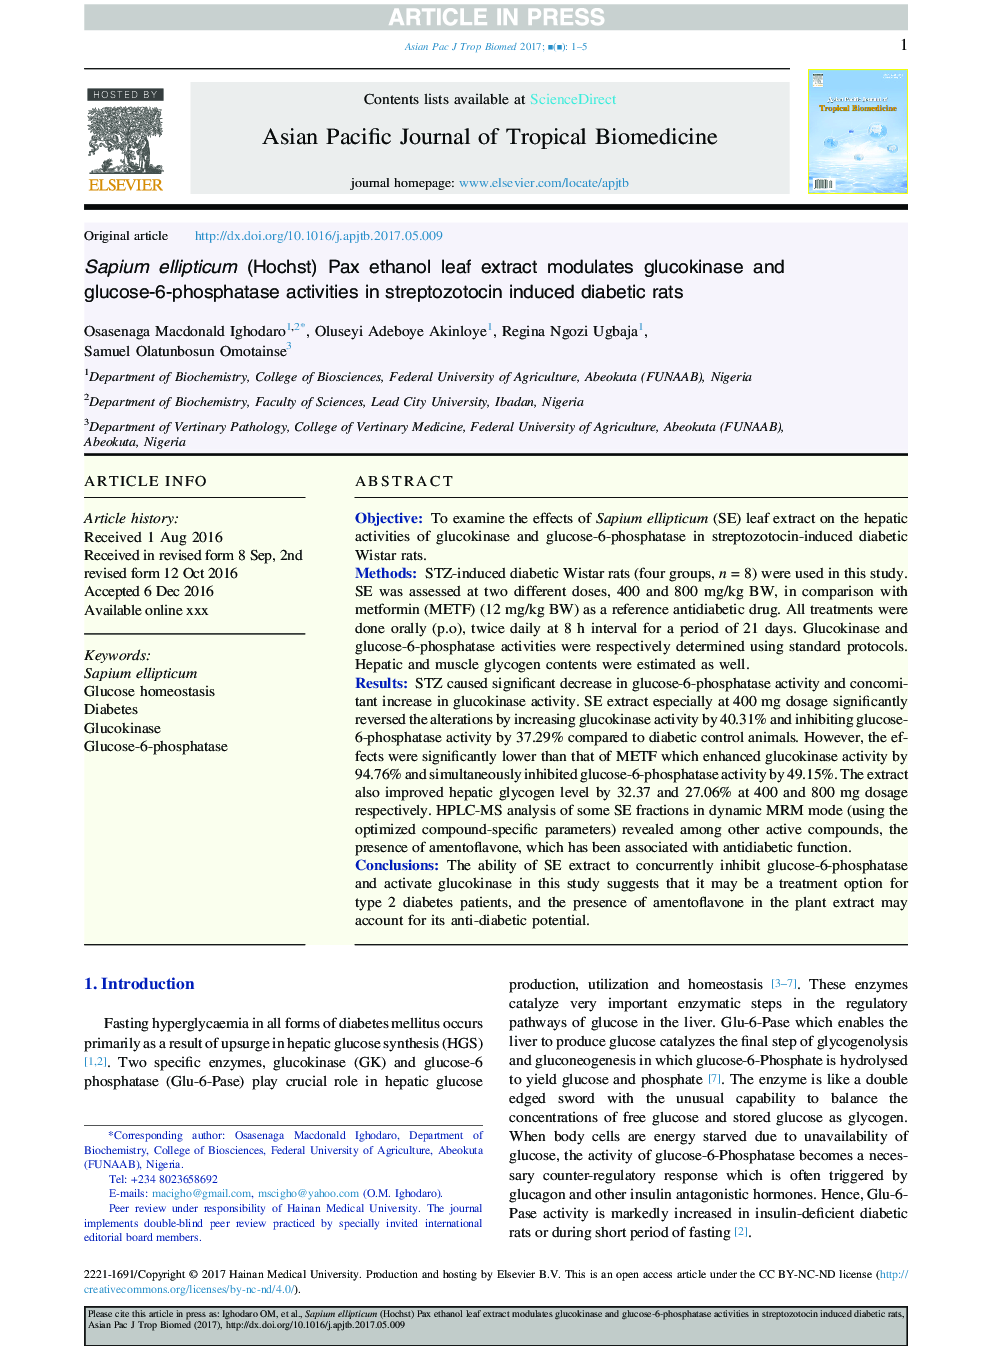 Sapium ellipticum (Hochst) Pax ethanol leaf extract modulates glucokinase and glucose-6-phosphatase activities in streptozotocin induced diabetic rats